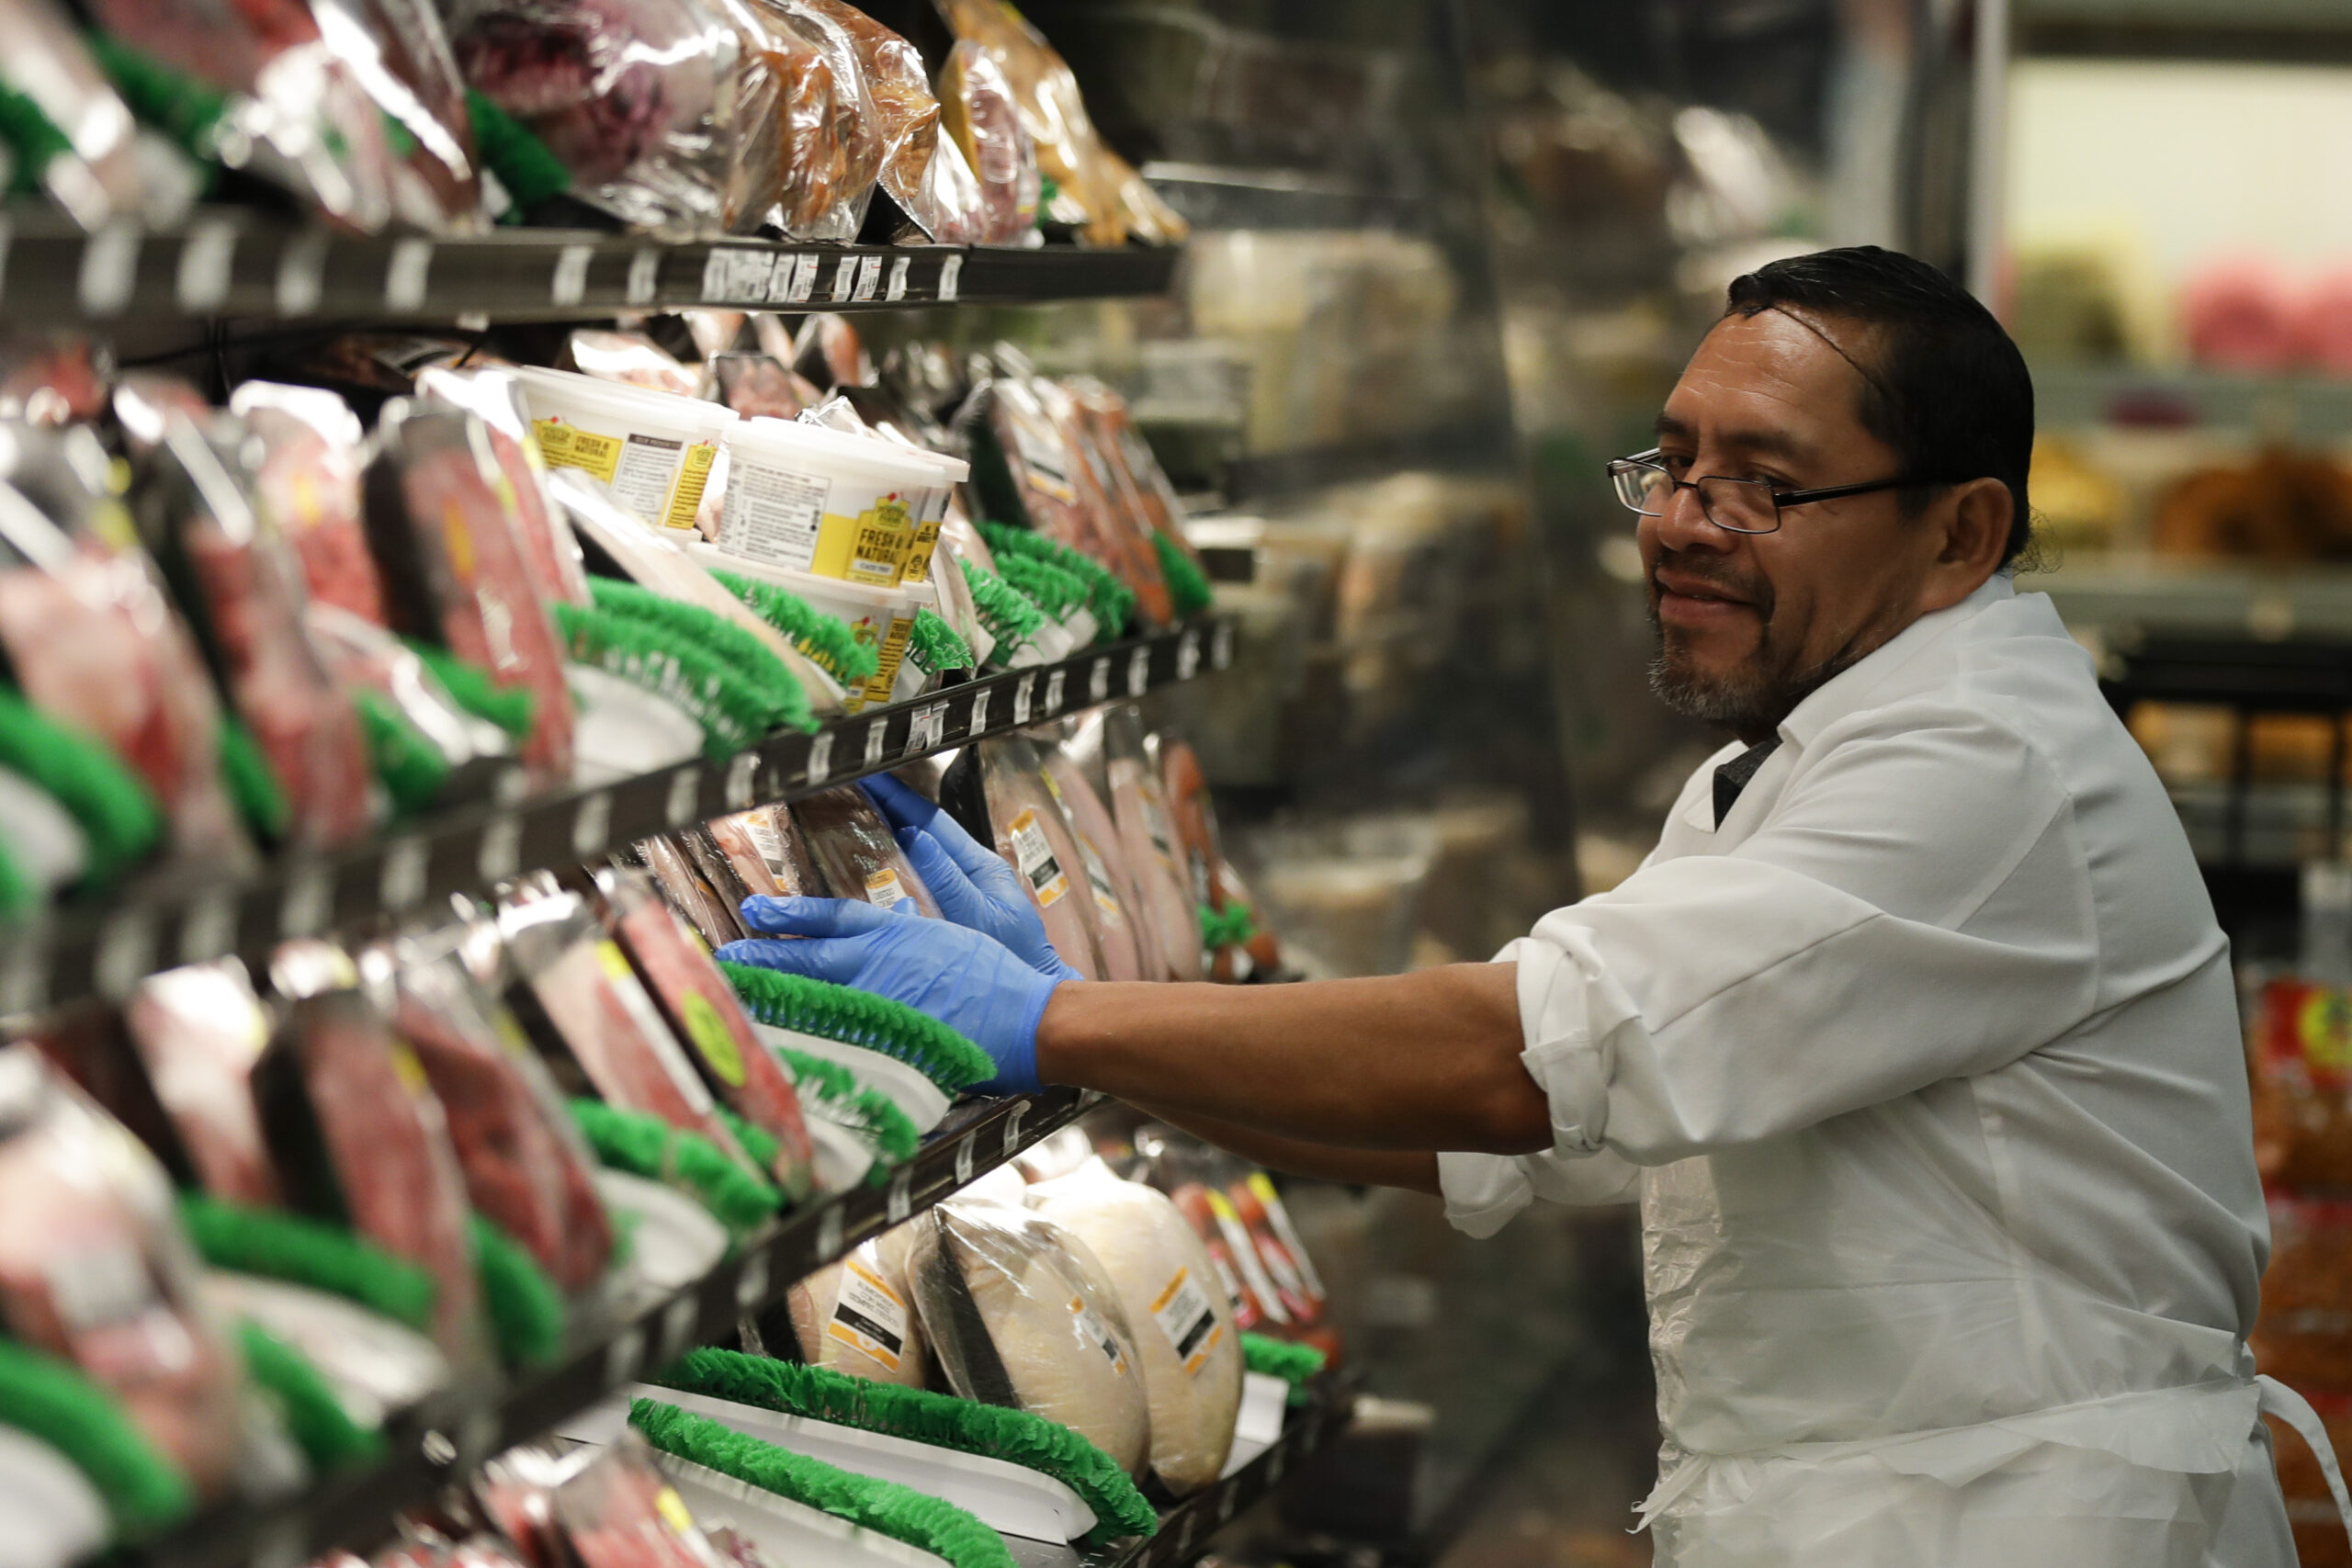 Jose Perez stocks meat wearing rubber gloves